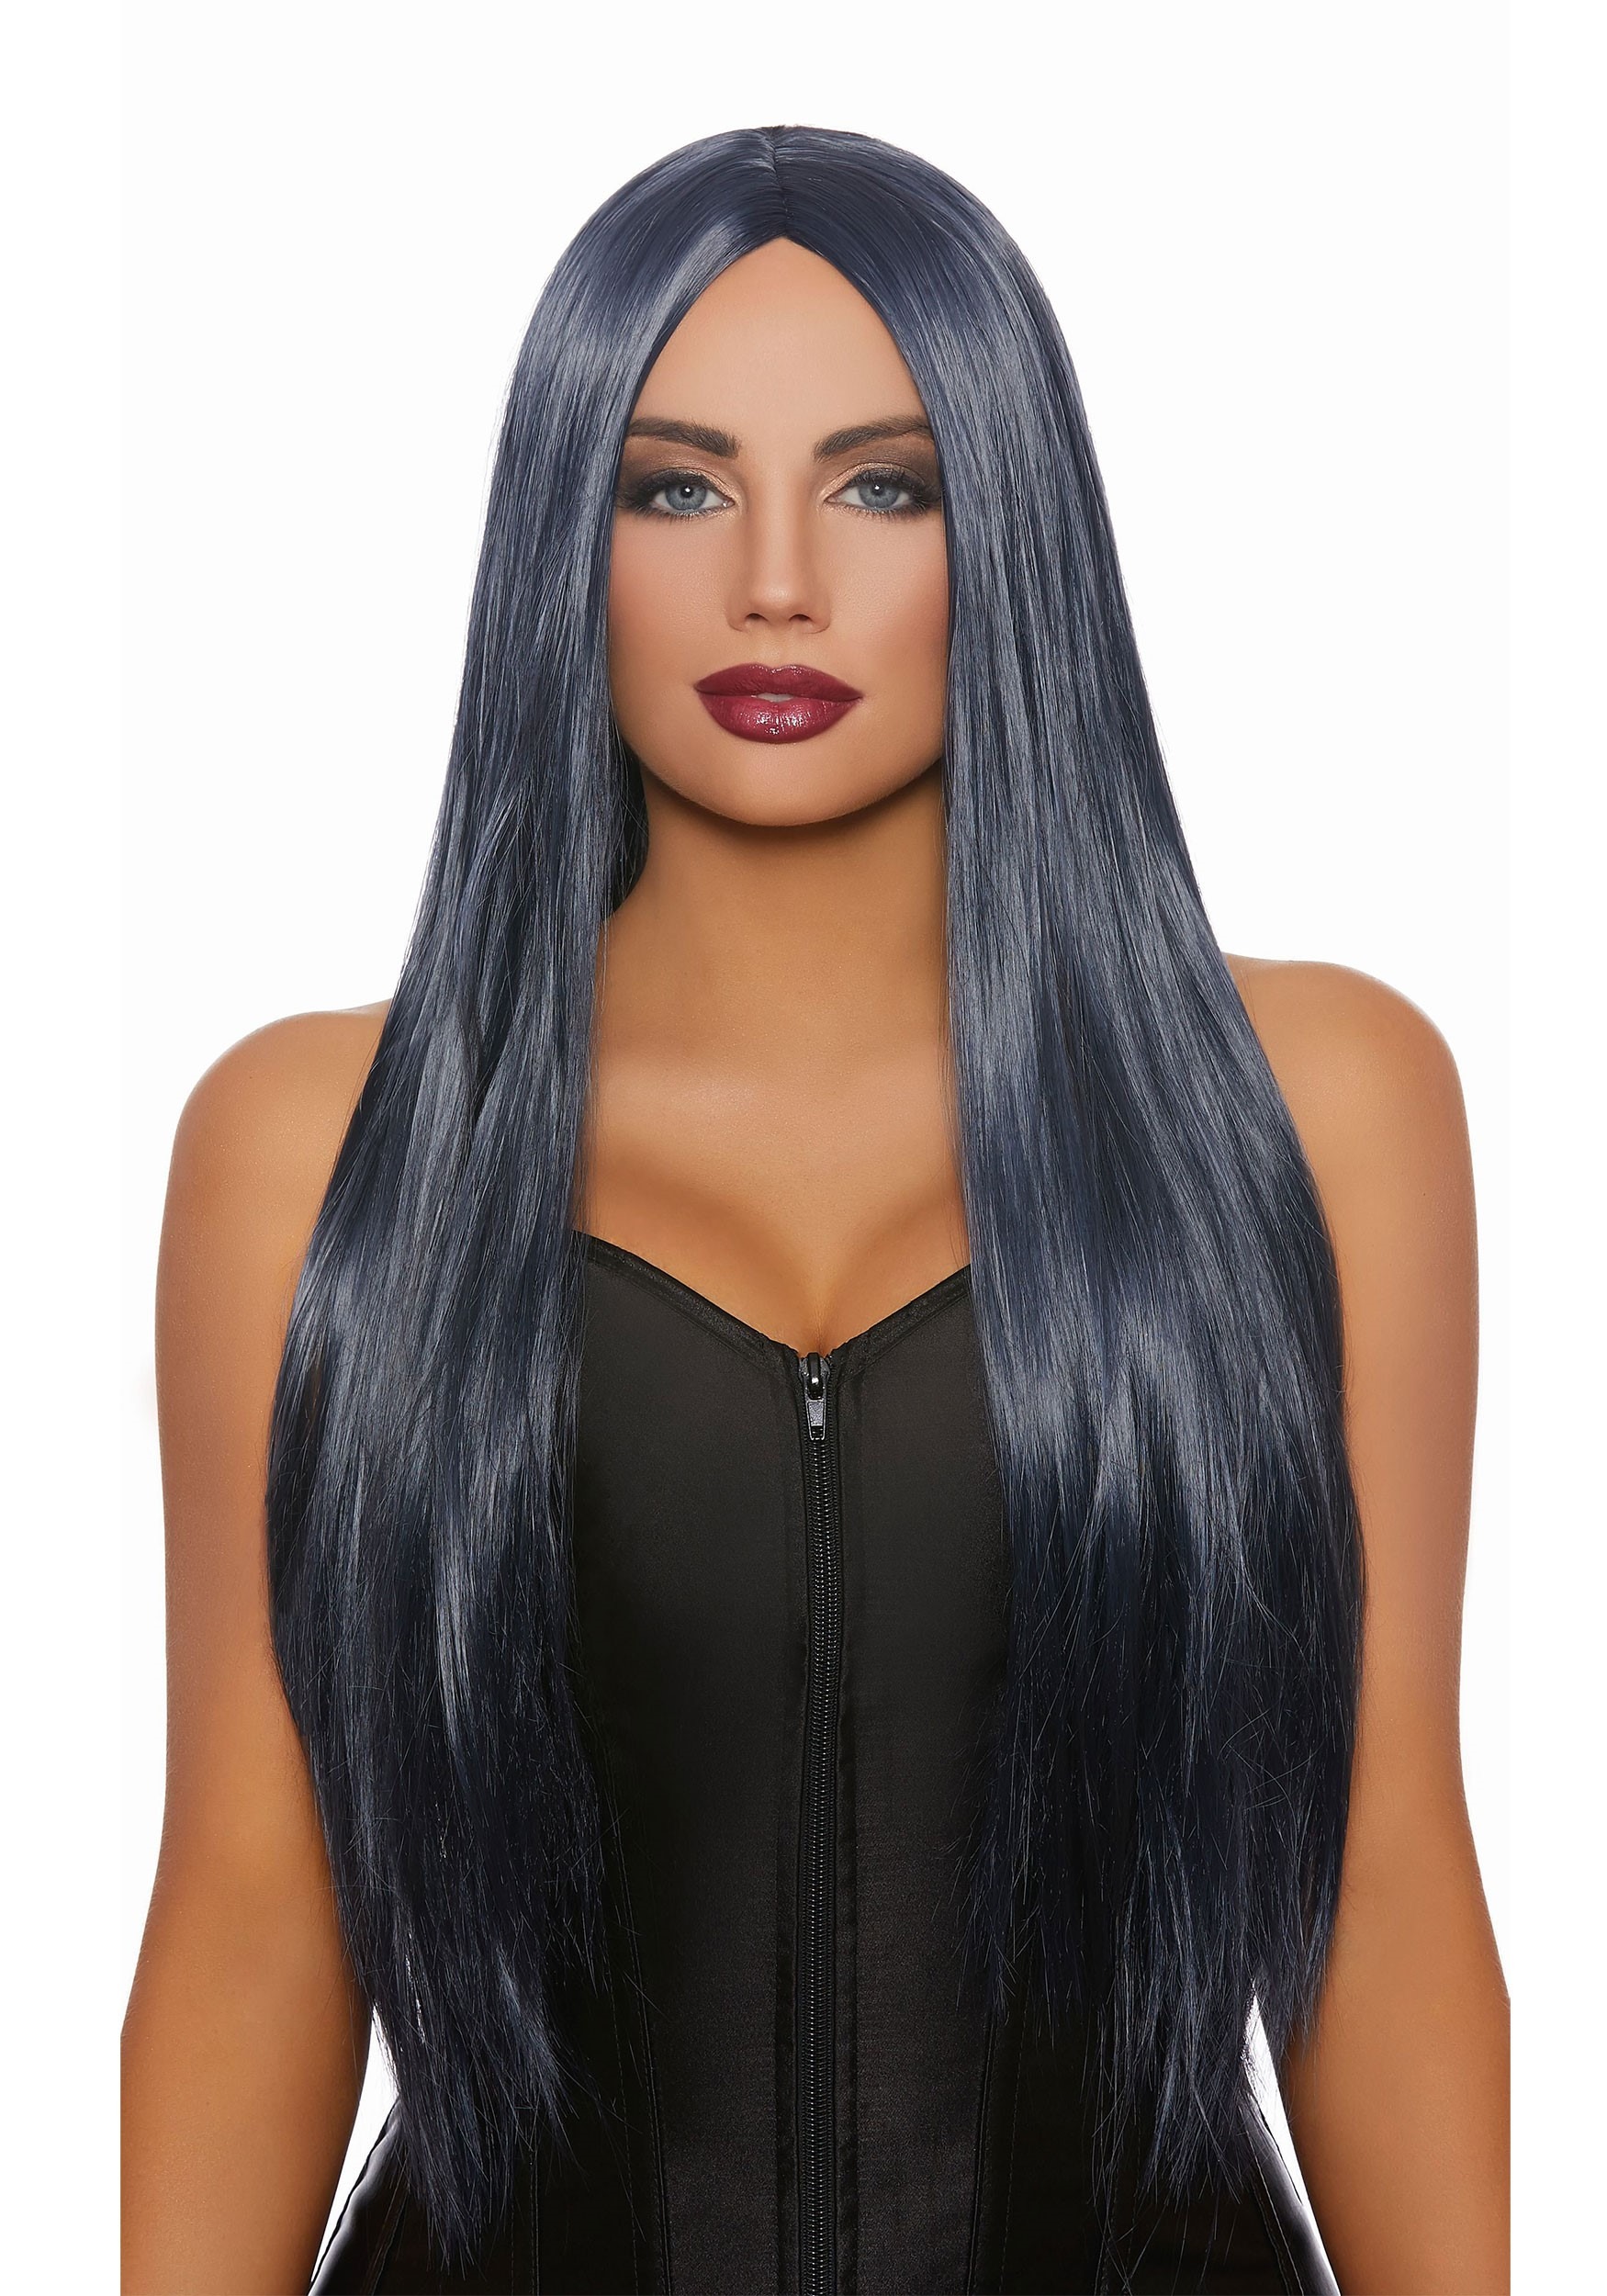 Blue/Gray Wig Long Straight